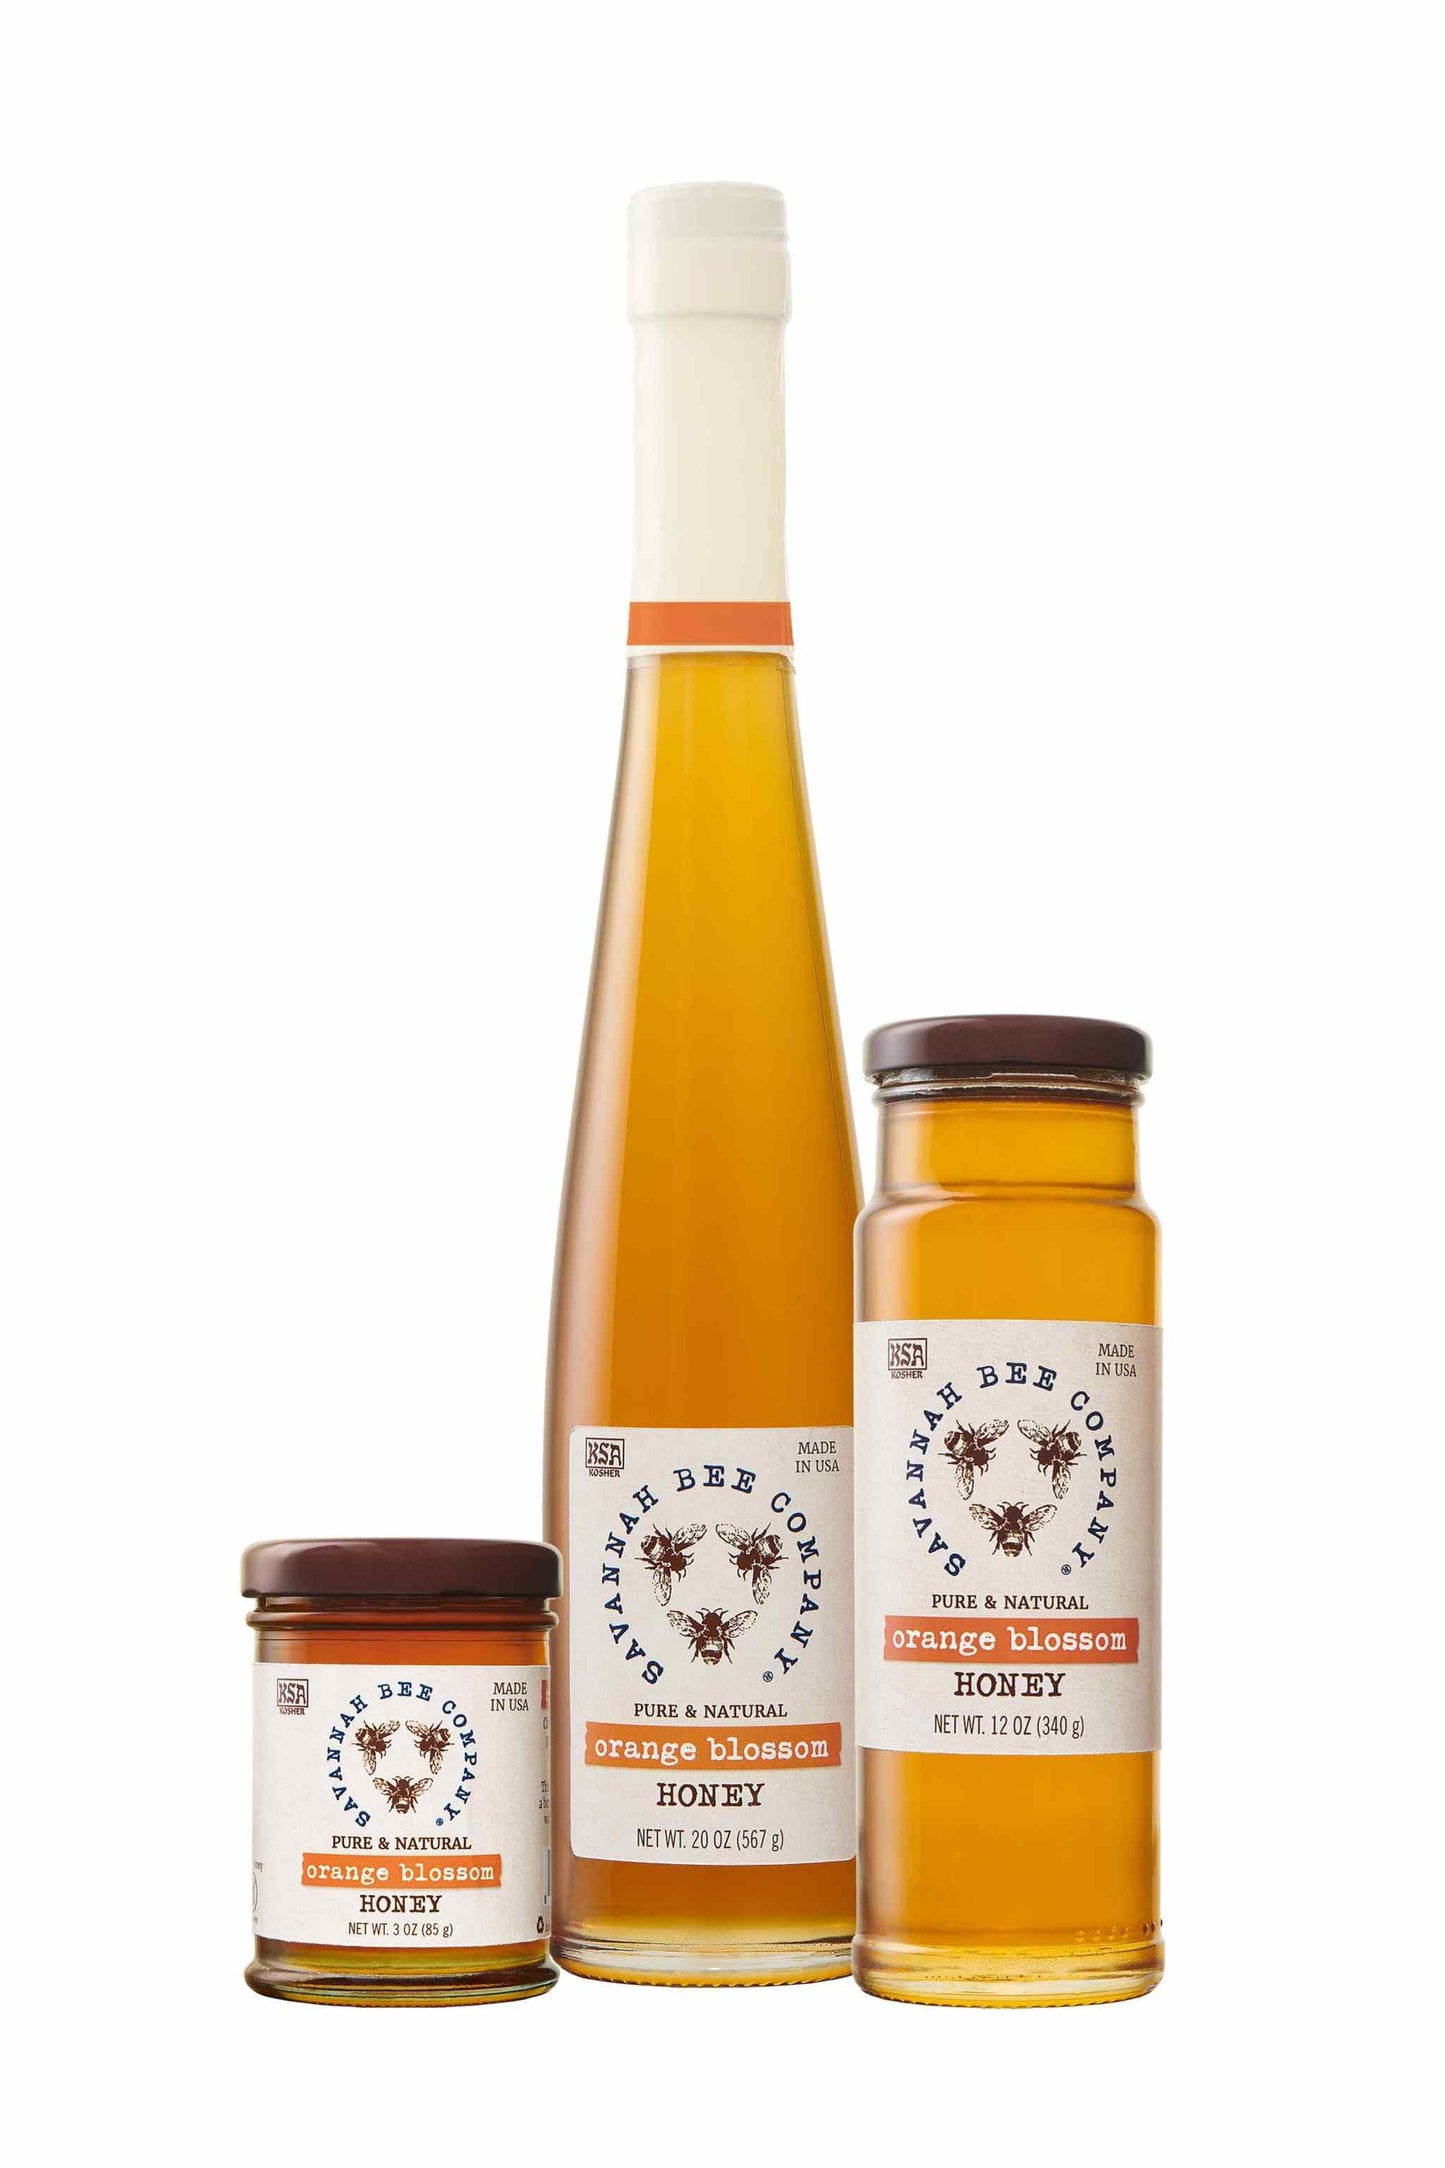 Pure & Natural Orange Blossom Honey 3 oz. mini, 12 oz. tower and 20 oz. flute